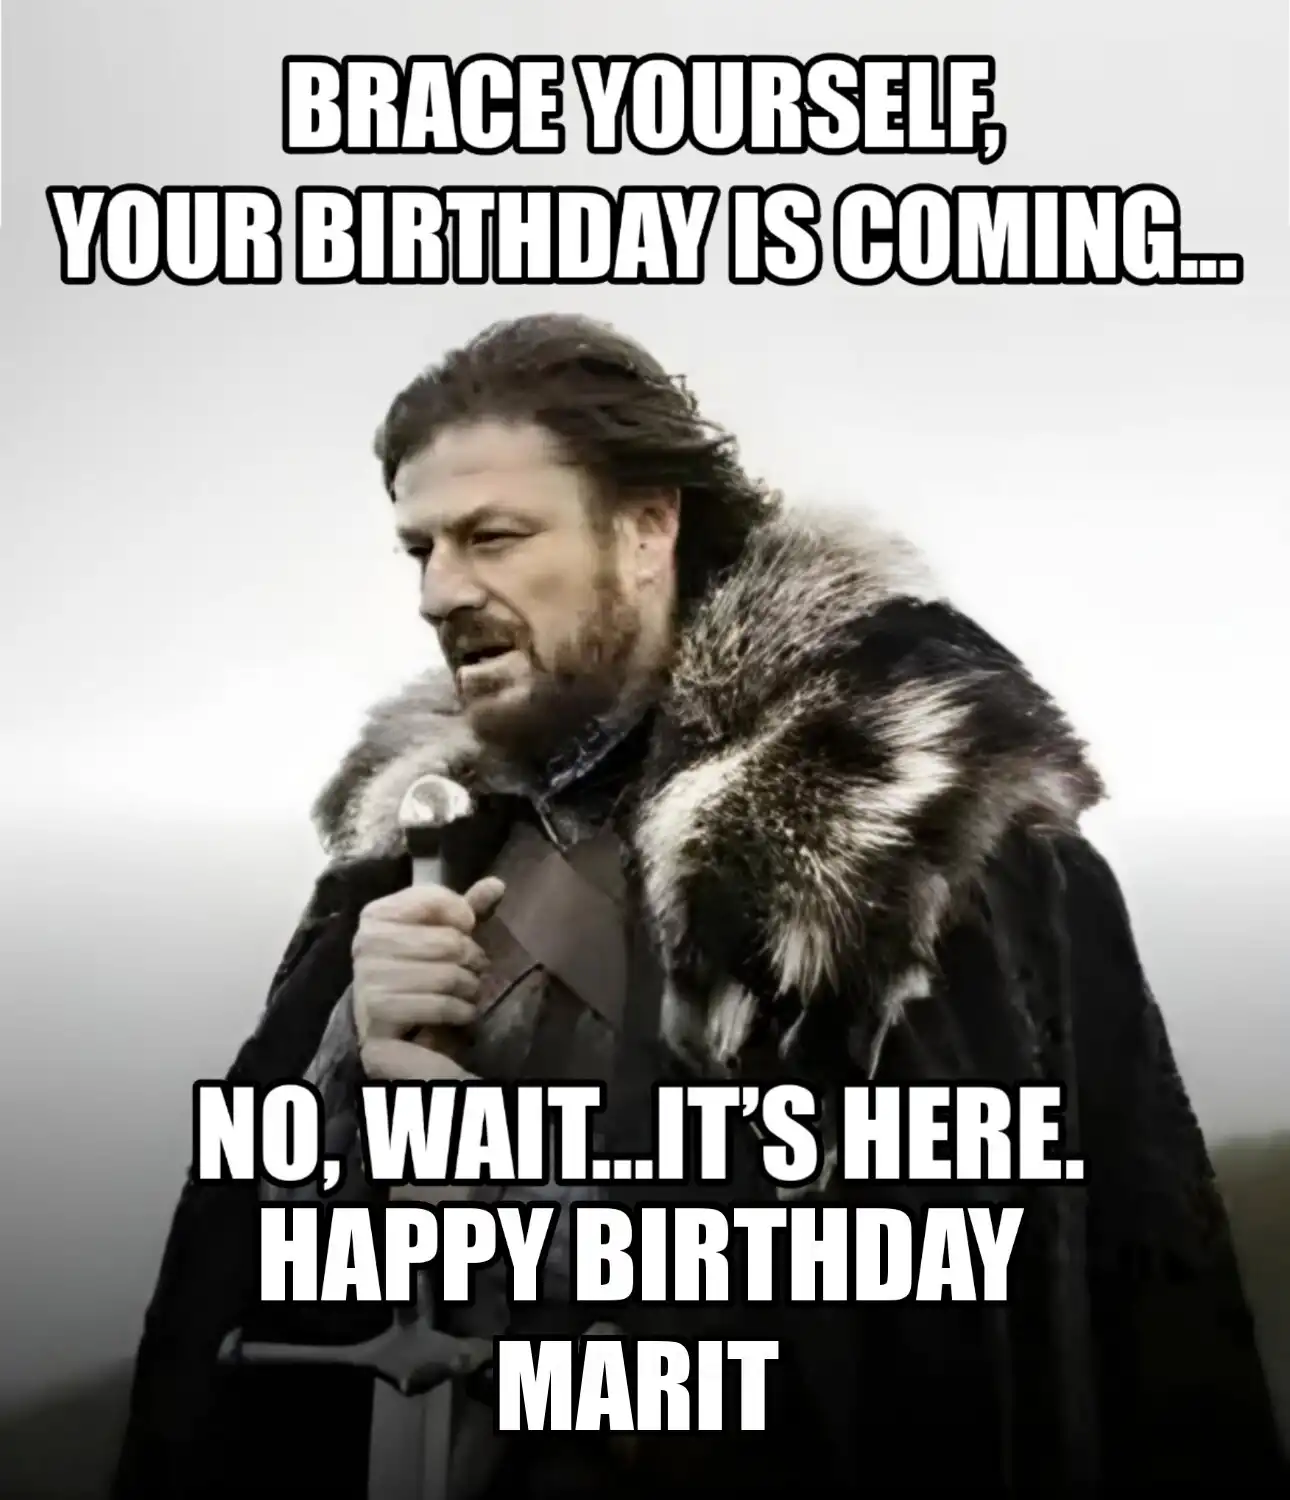 Happy Birthday Marit Brace Yourself Your Birthday Is Coming Meme